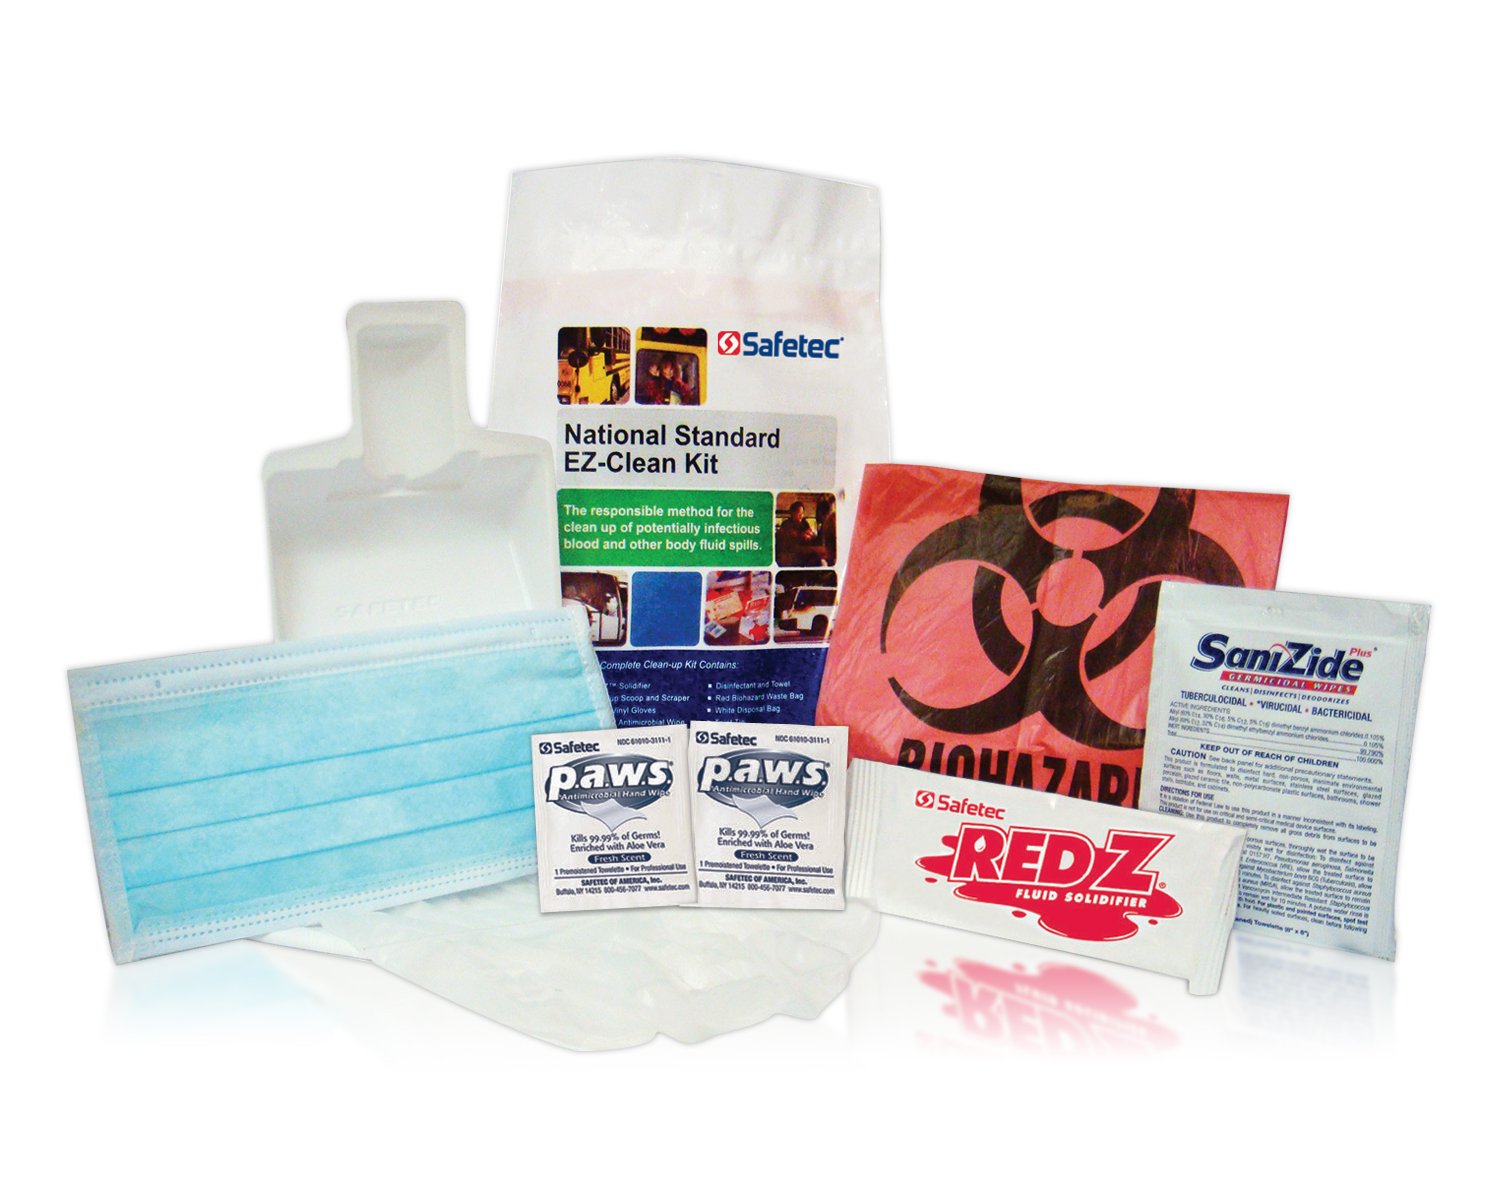 National Standard™ EZ-Cleans Kit